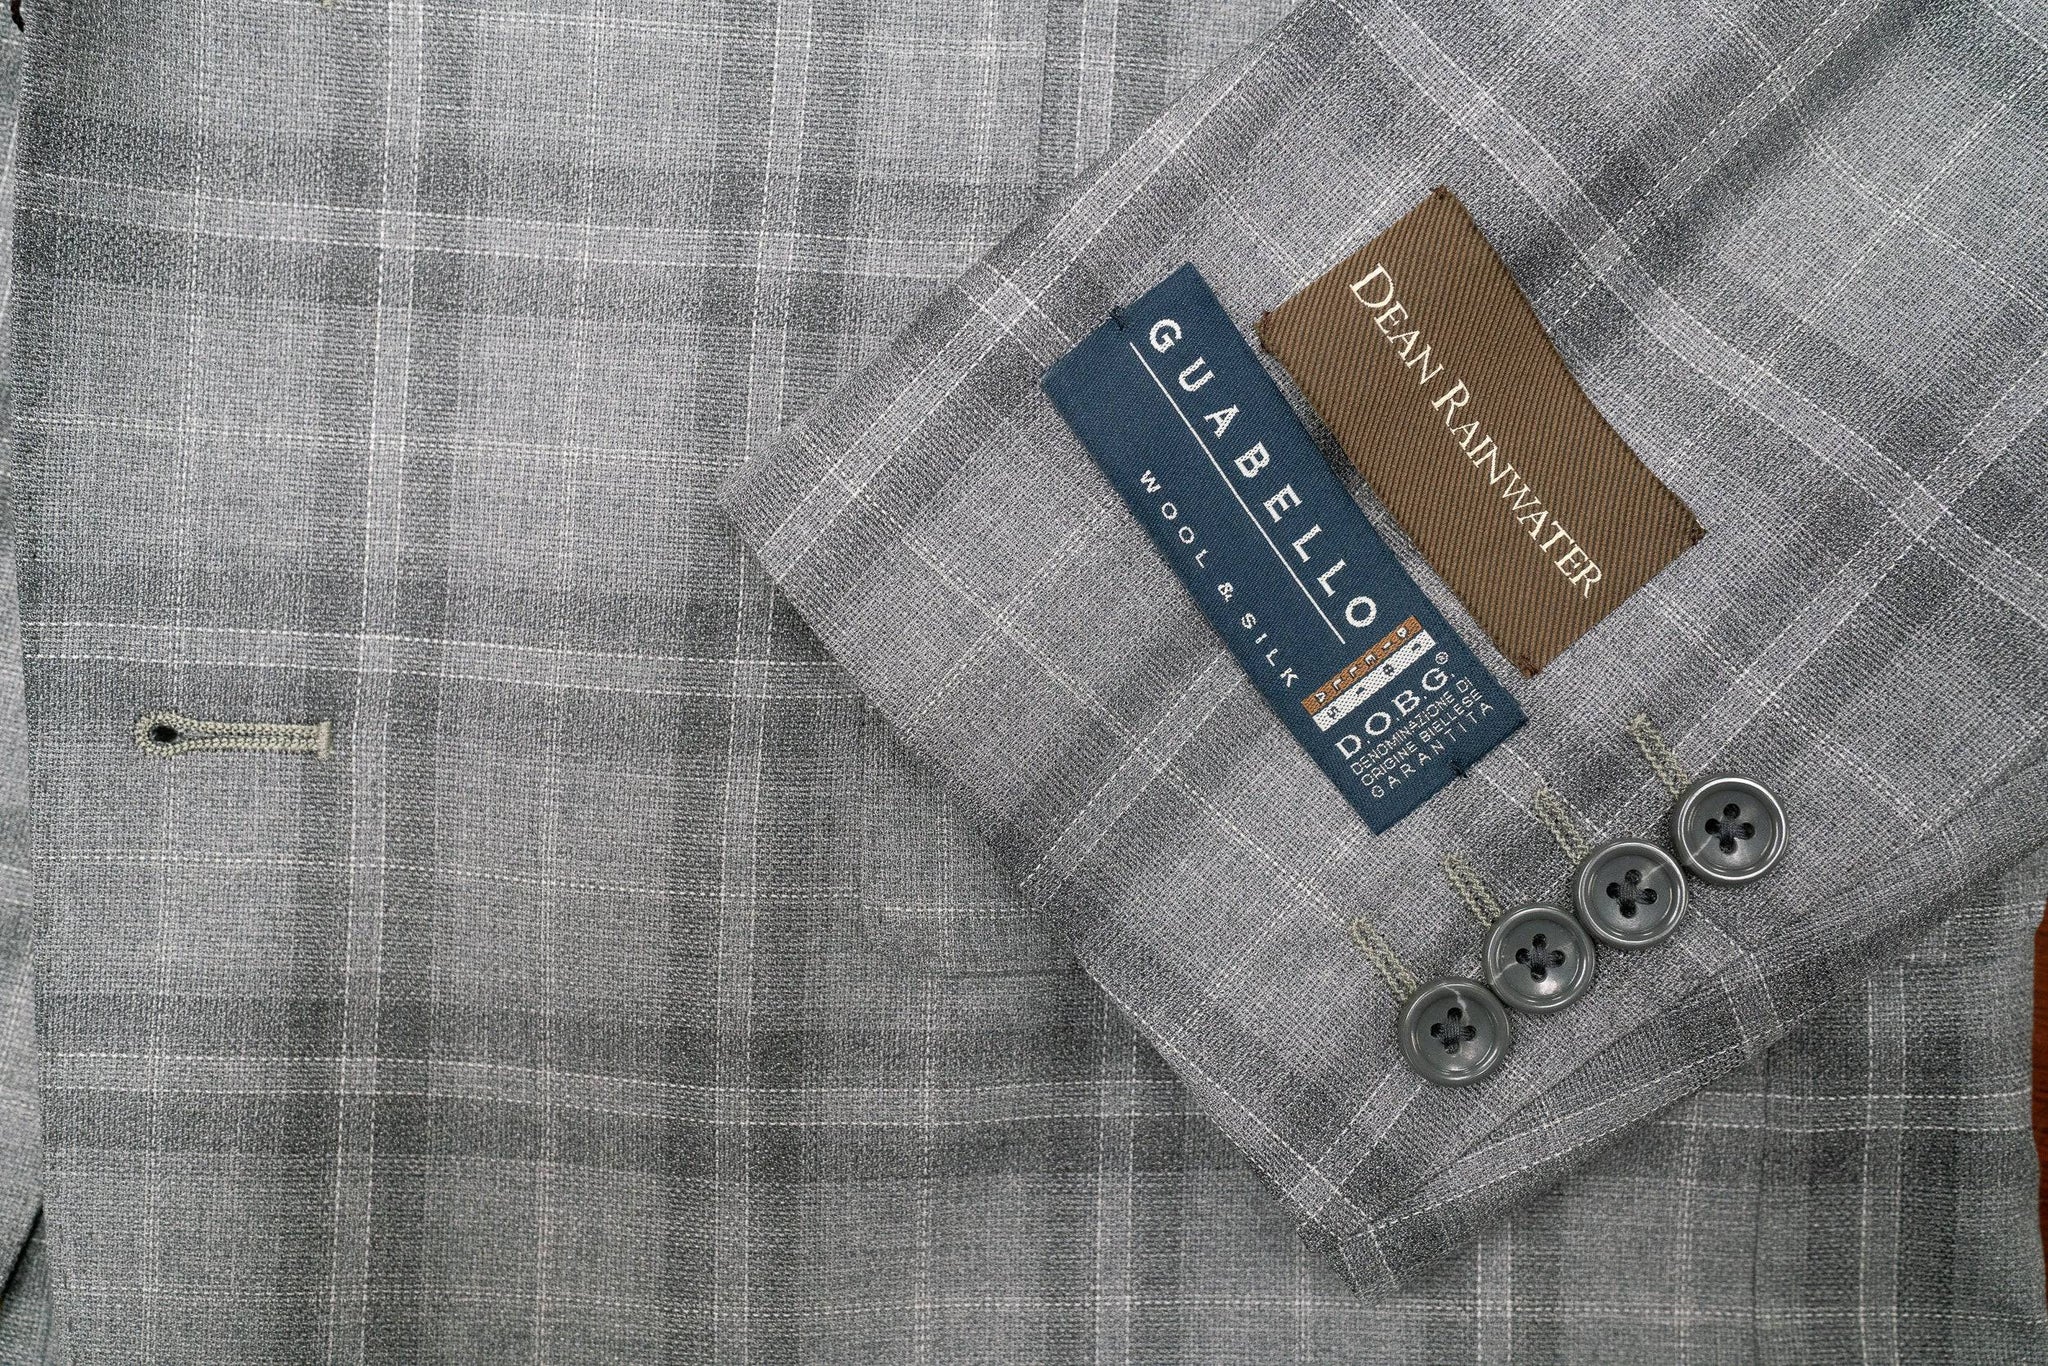 Guabello Grey Plaid Wool & Silk Soft Coat - Rainwater's Men's Clothing and Tuxedo Rental